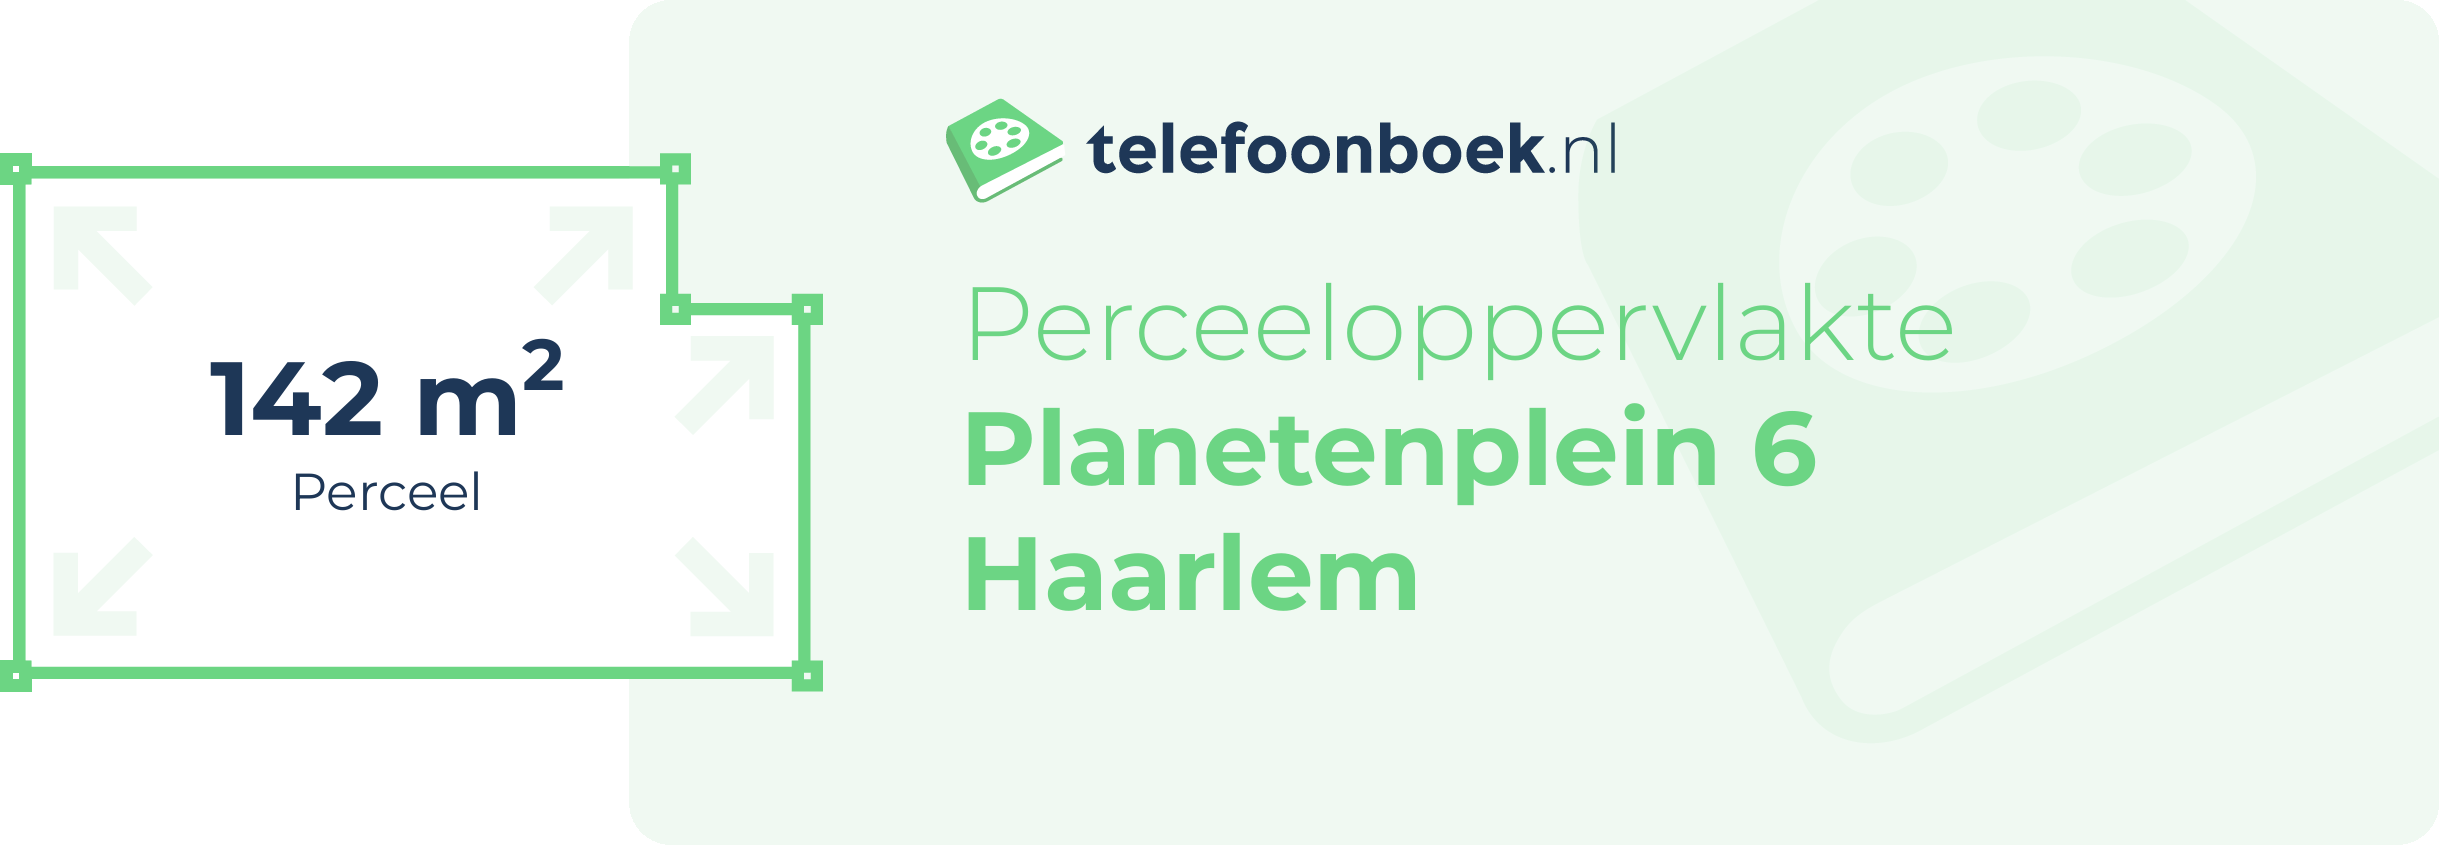 Perceeloppervlakte Planetenplein 6 Haarlem